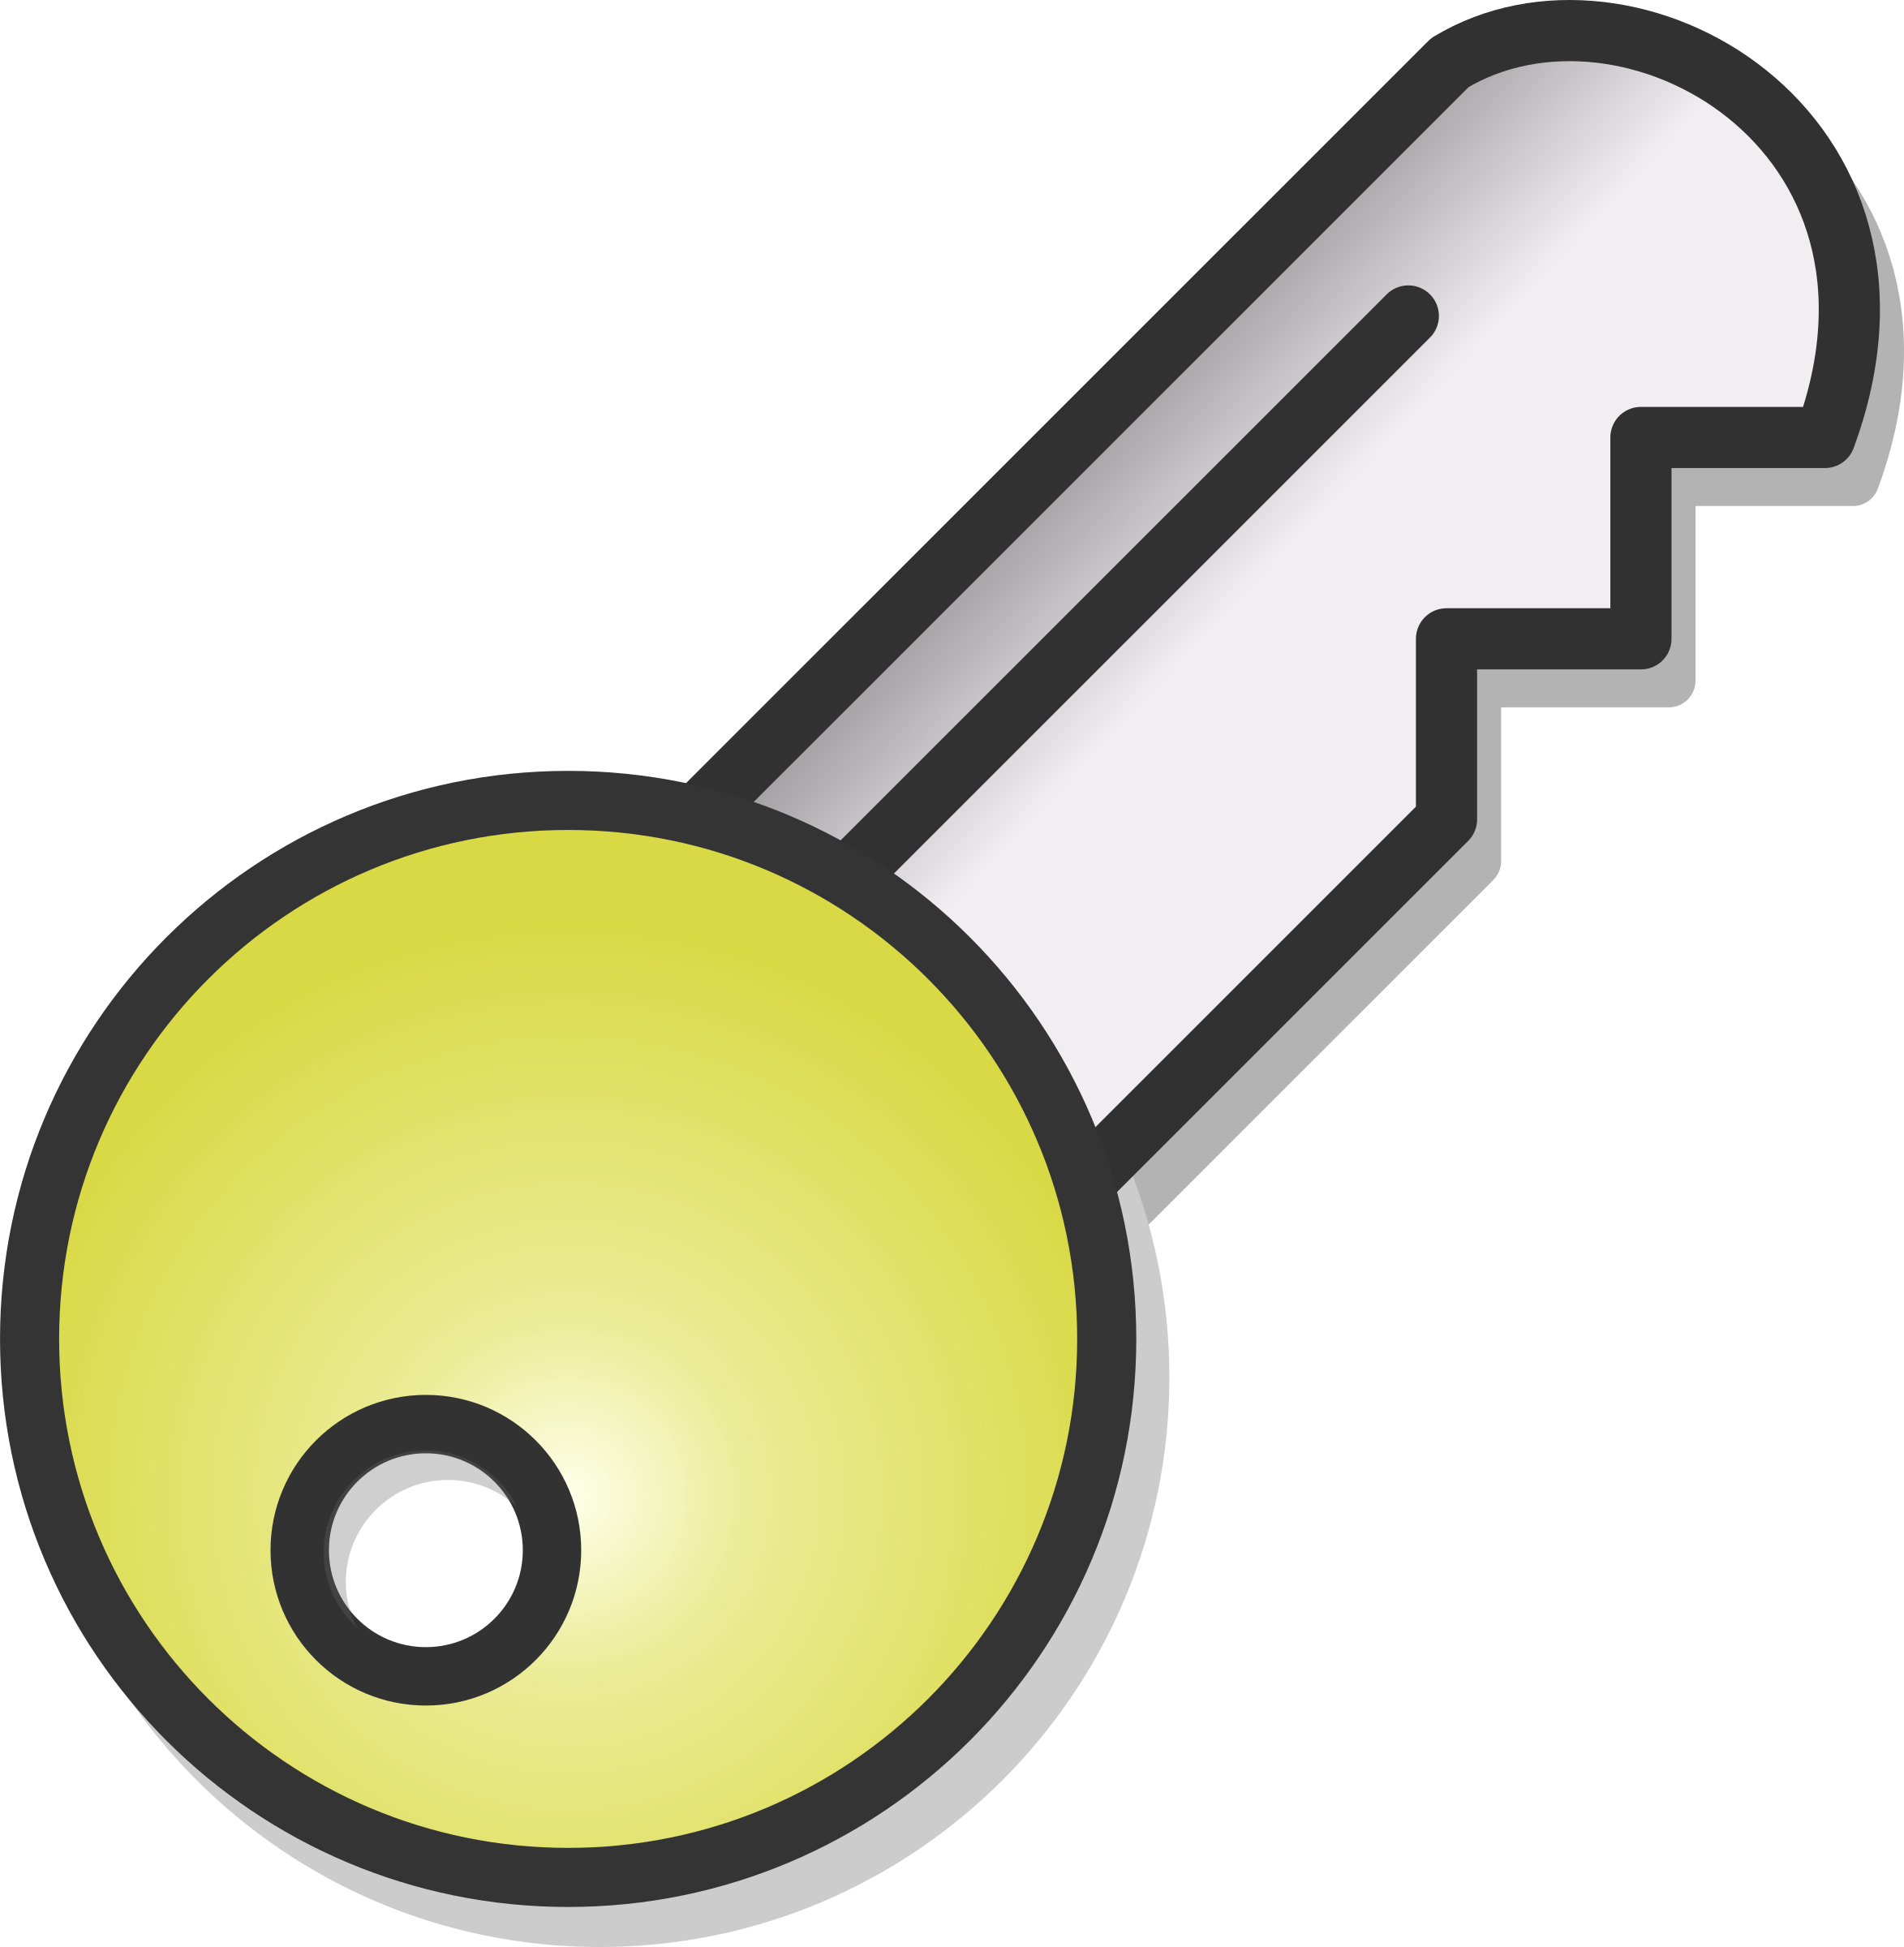 animated keys clipart - Clipground